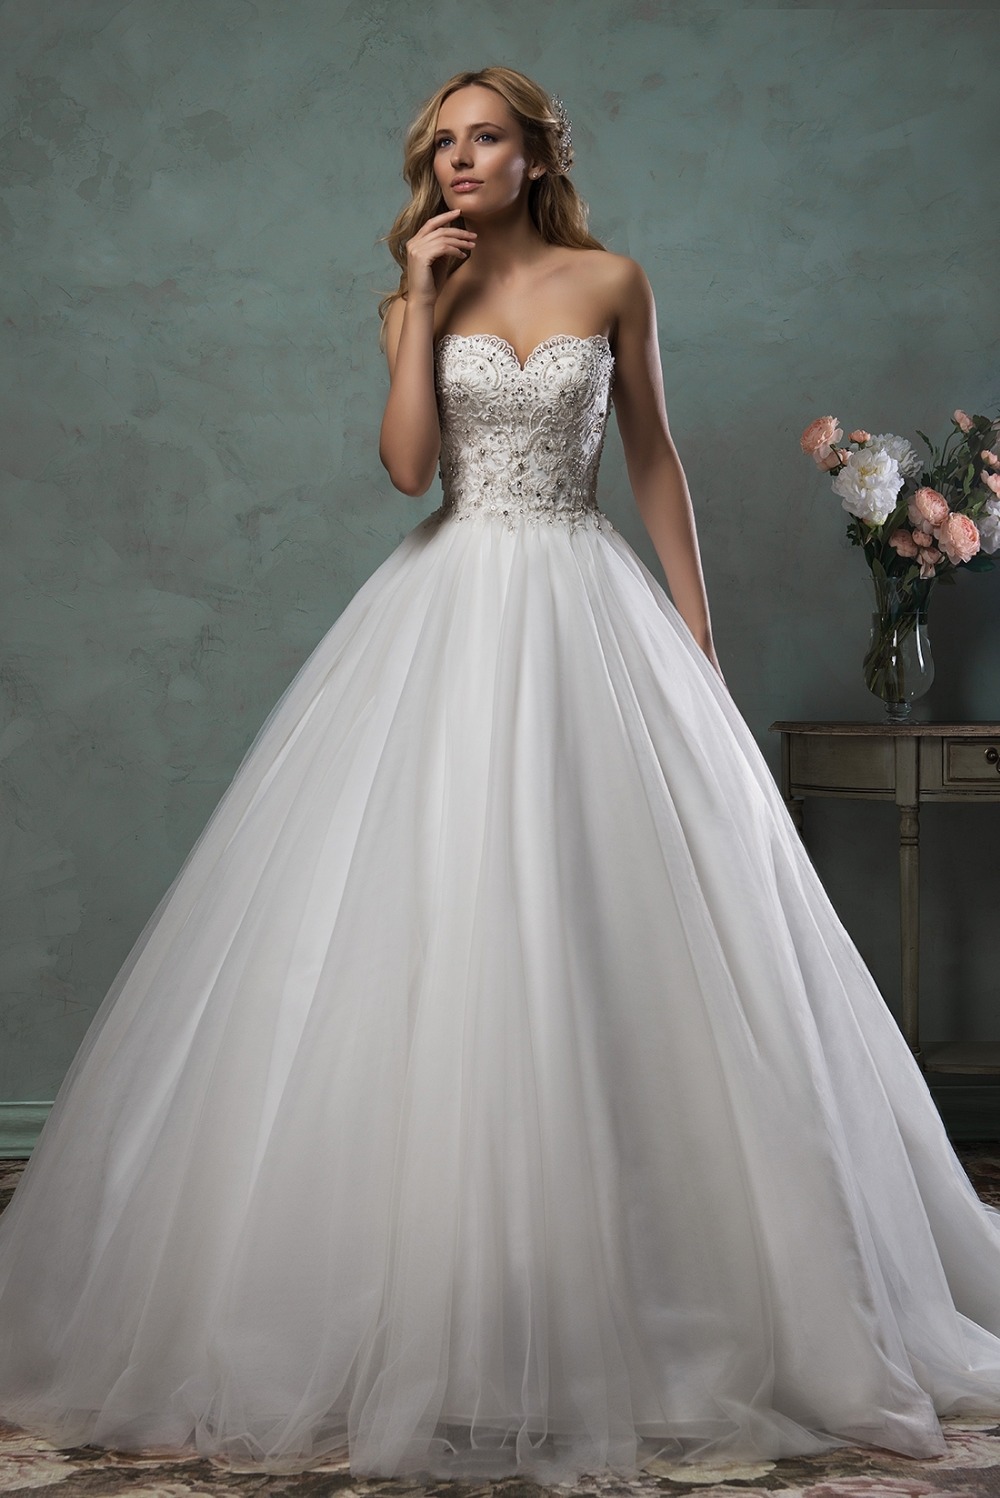 corset princess ball gown wedding dress « Bella Forte Glass Studio